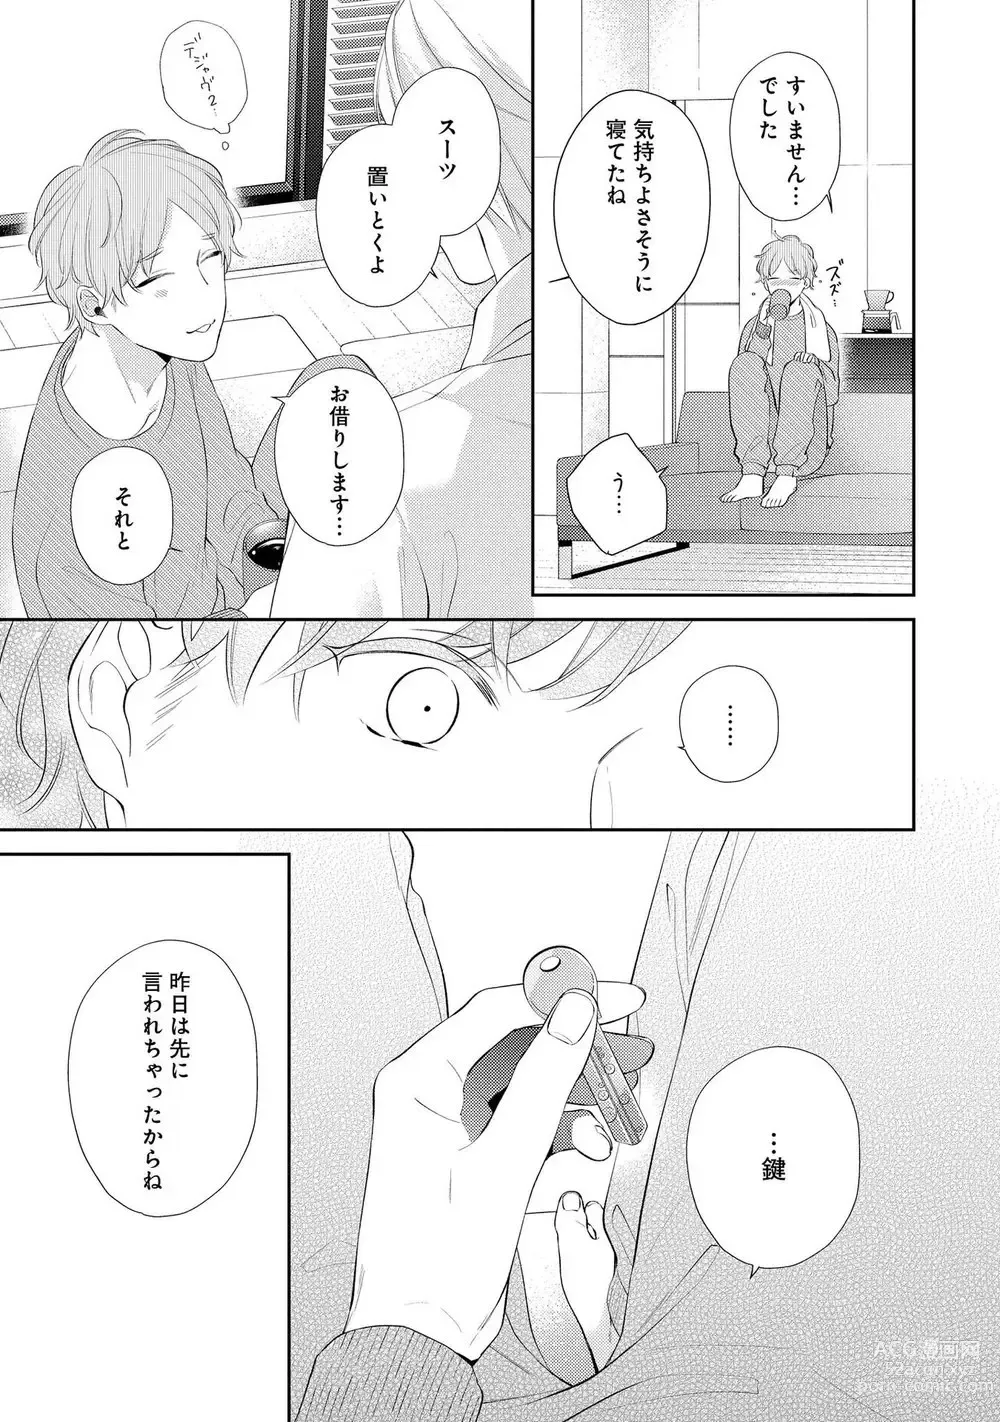 Page 157 of manga NIGHT MILK HEAVEN